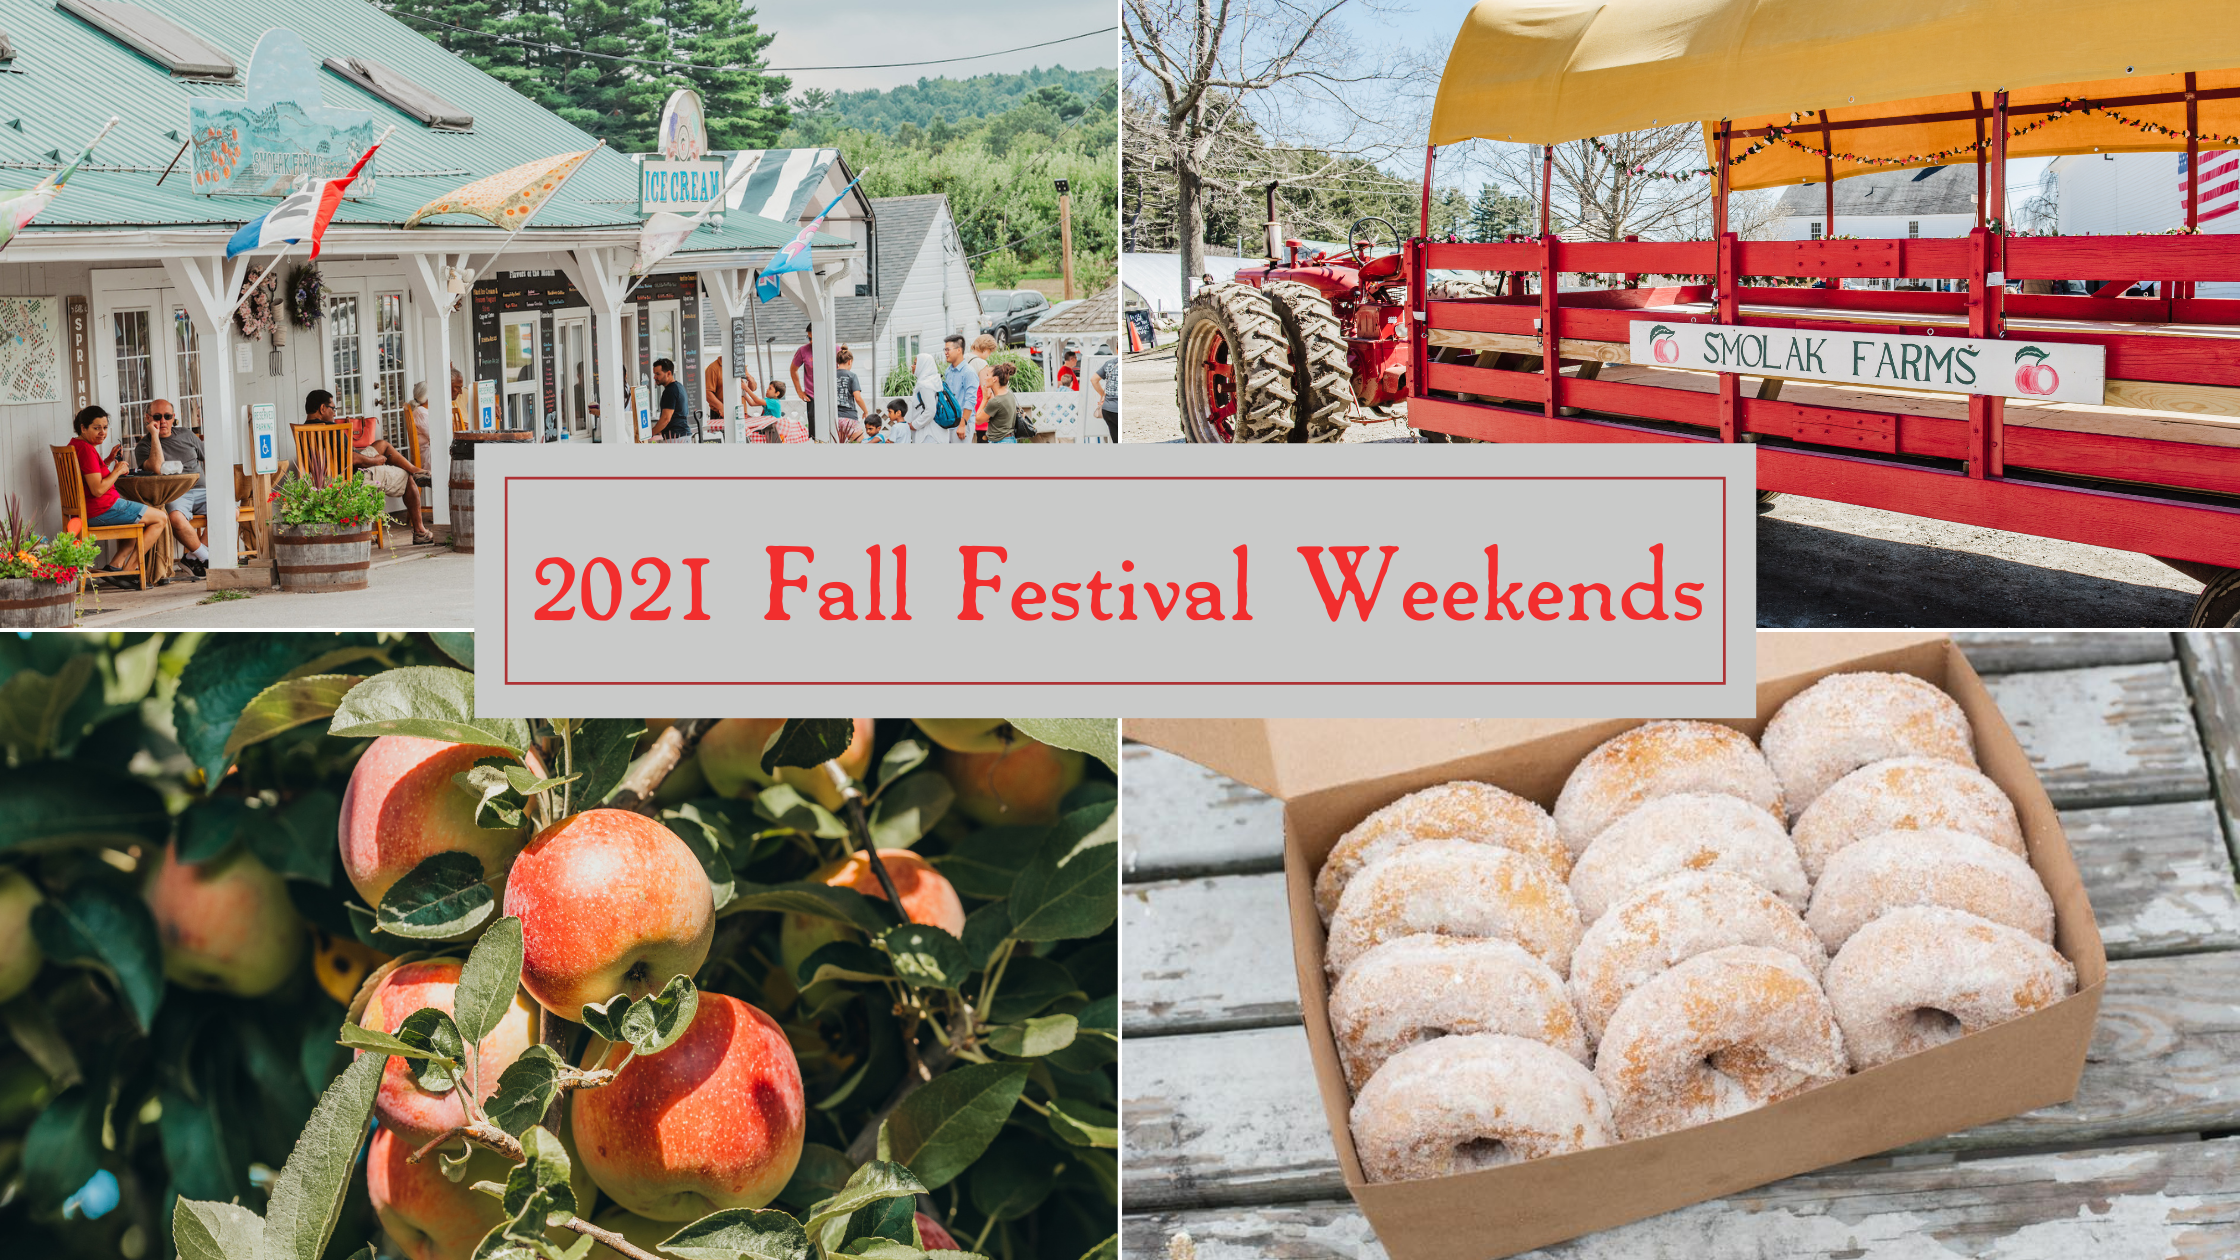 Smolak Farms 2021 Fall Festival Weekends